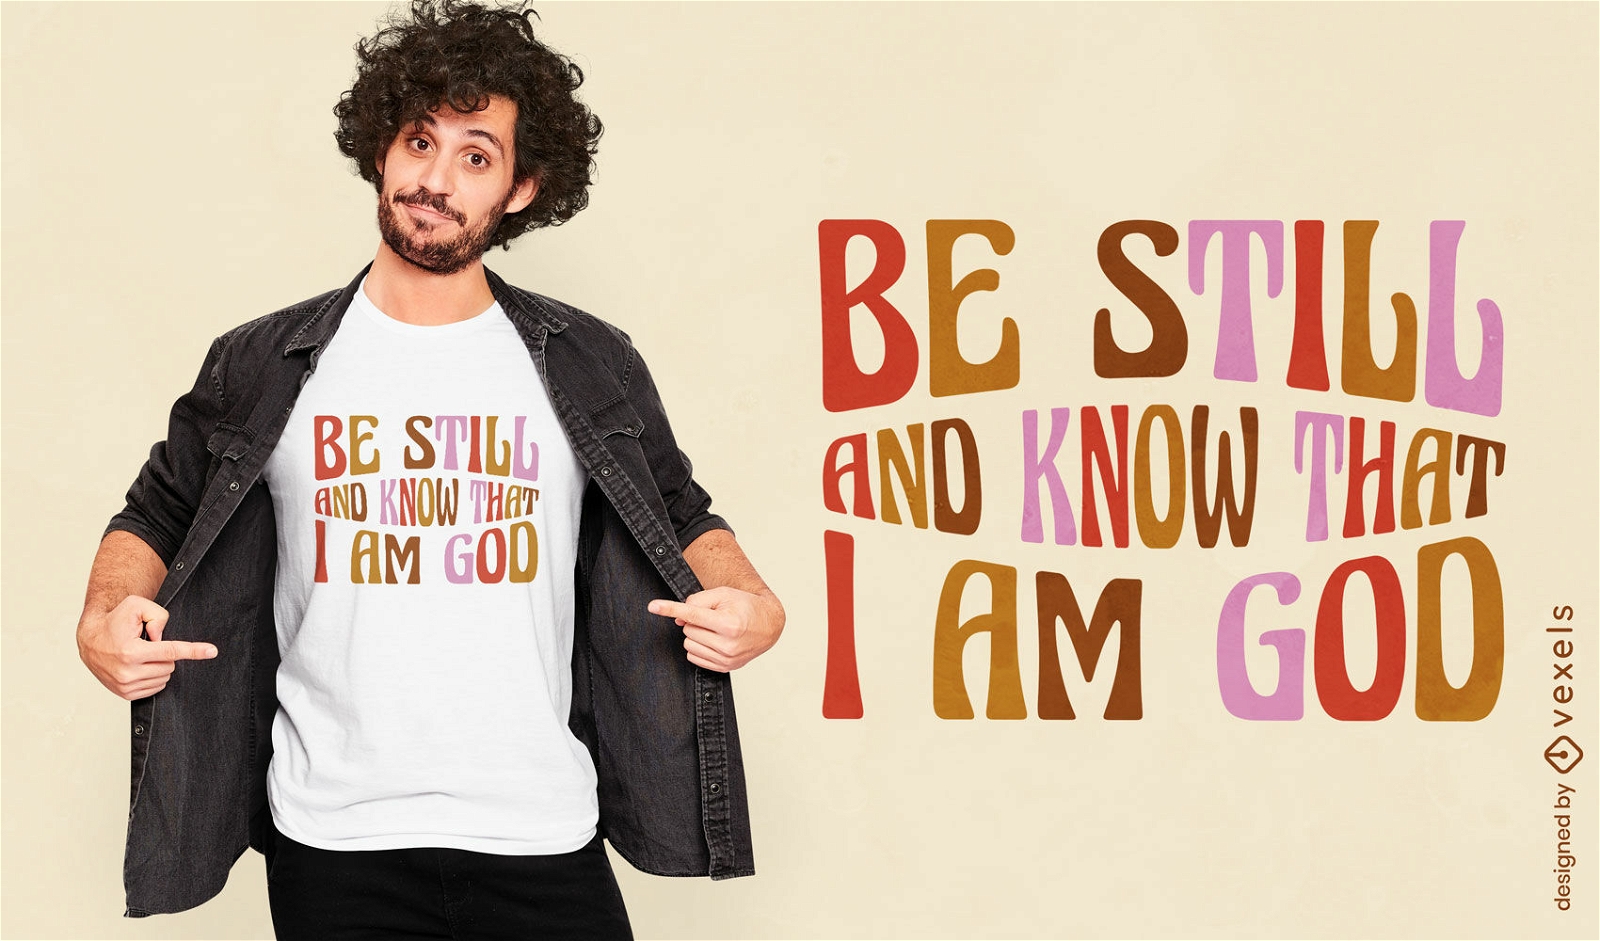 Christian god religious quote t-shirt design